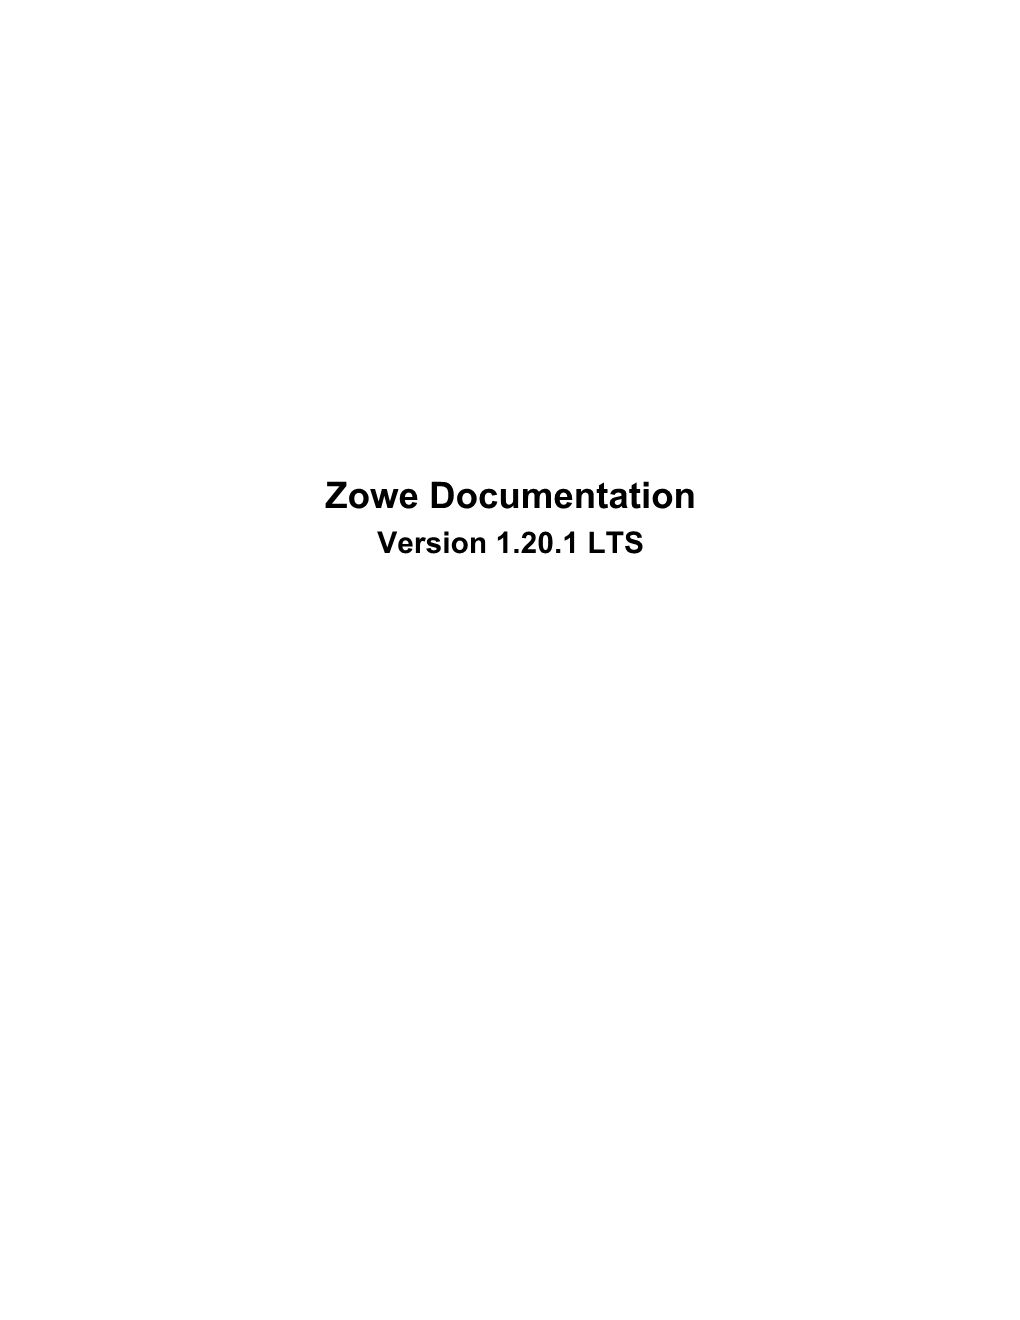 Zowe Documentation Version 1.20.1 LTS